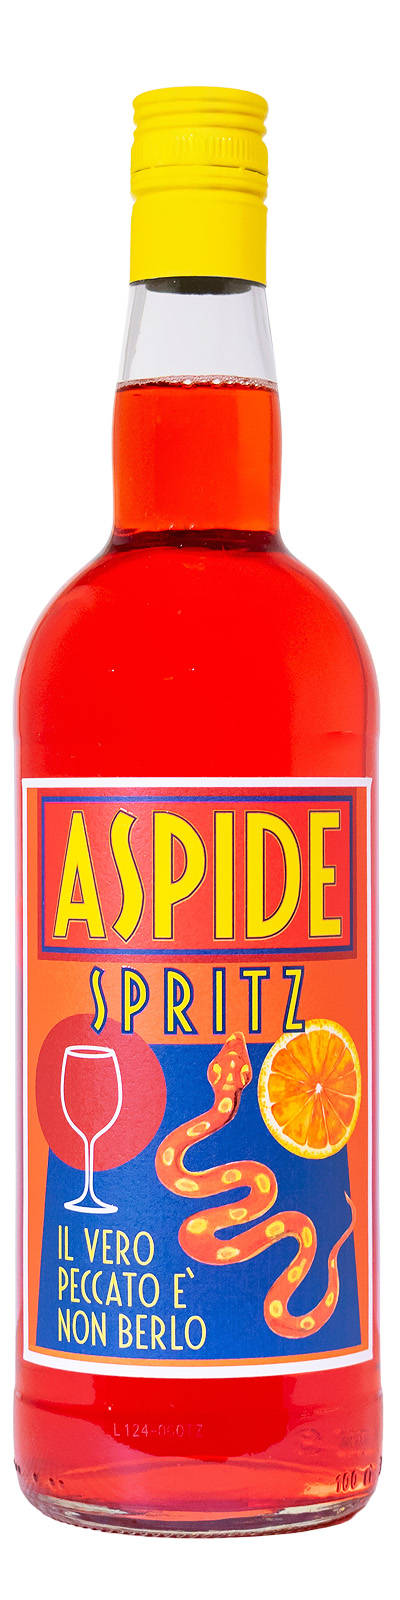 Silvio Carta Aspide Spritz - 1 Liter 11% vol